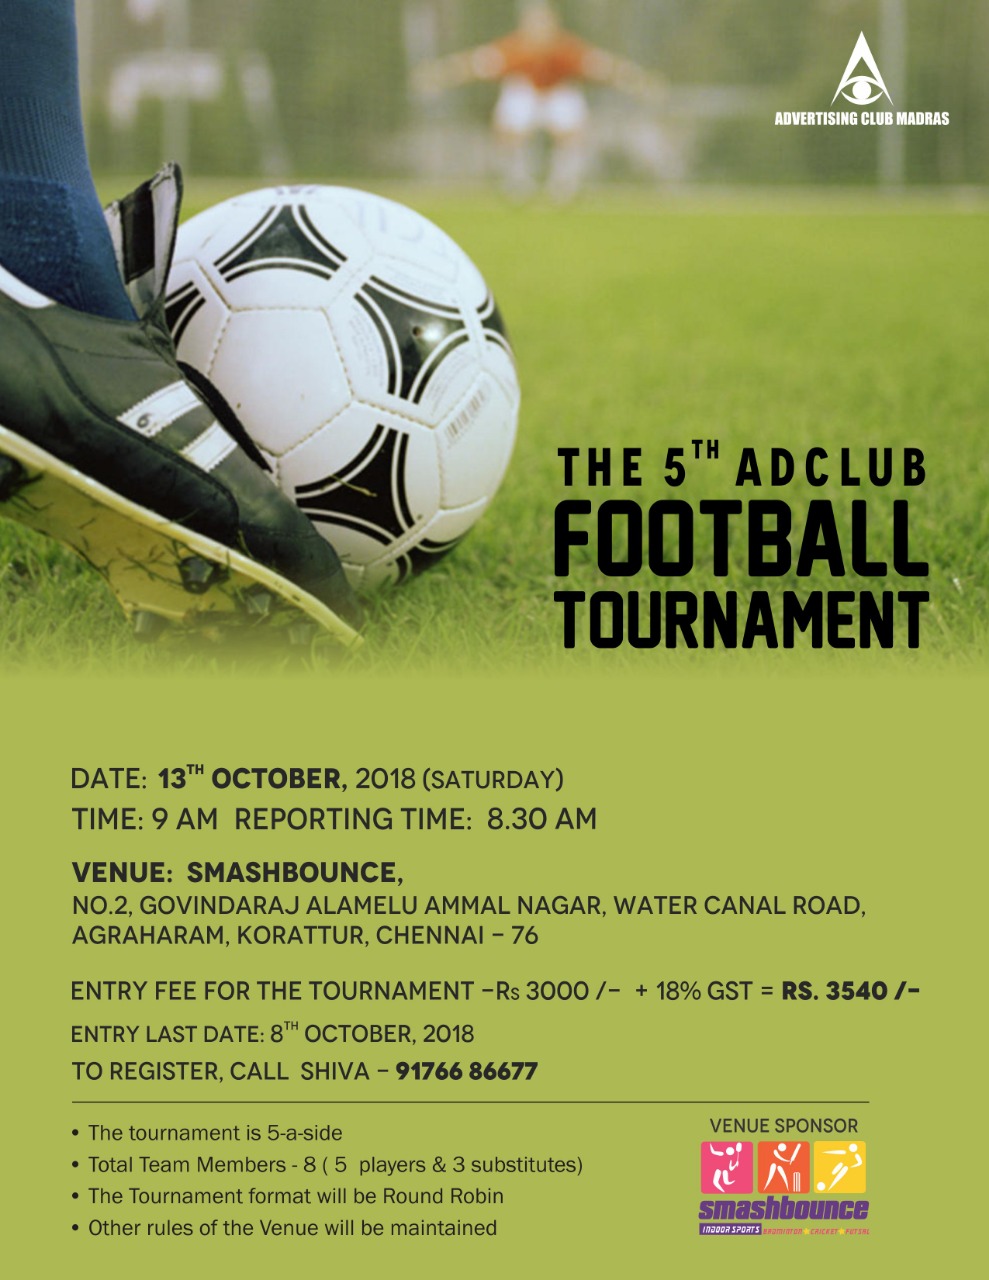 The 5th Adclub Football Tournament